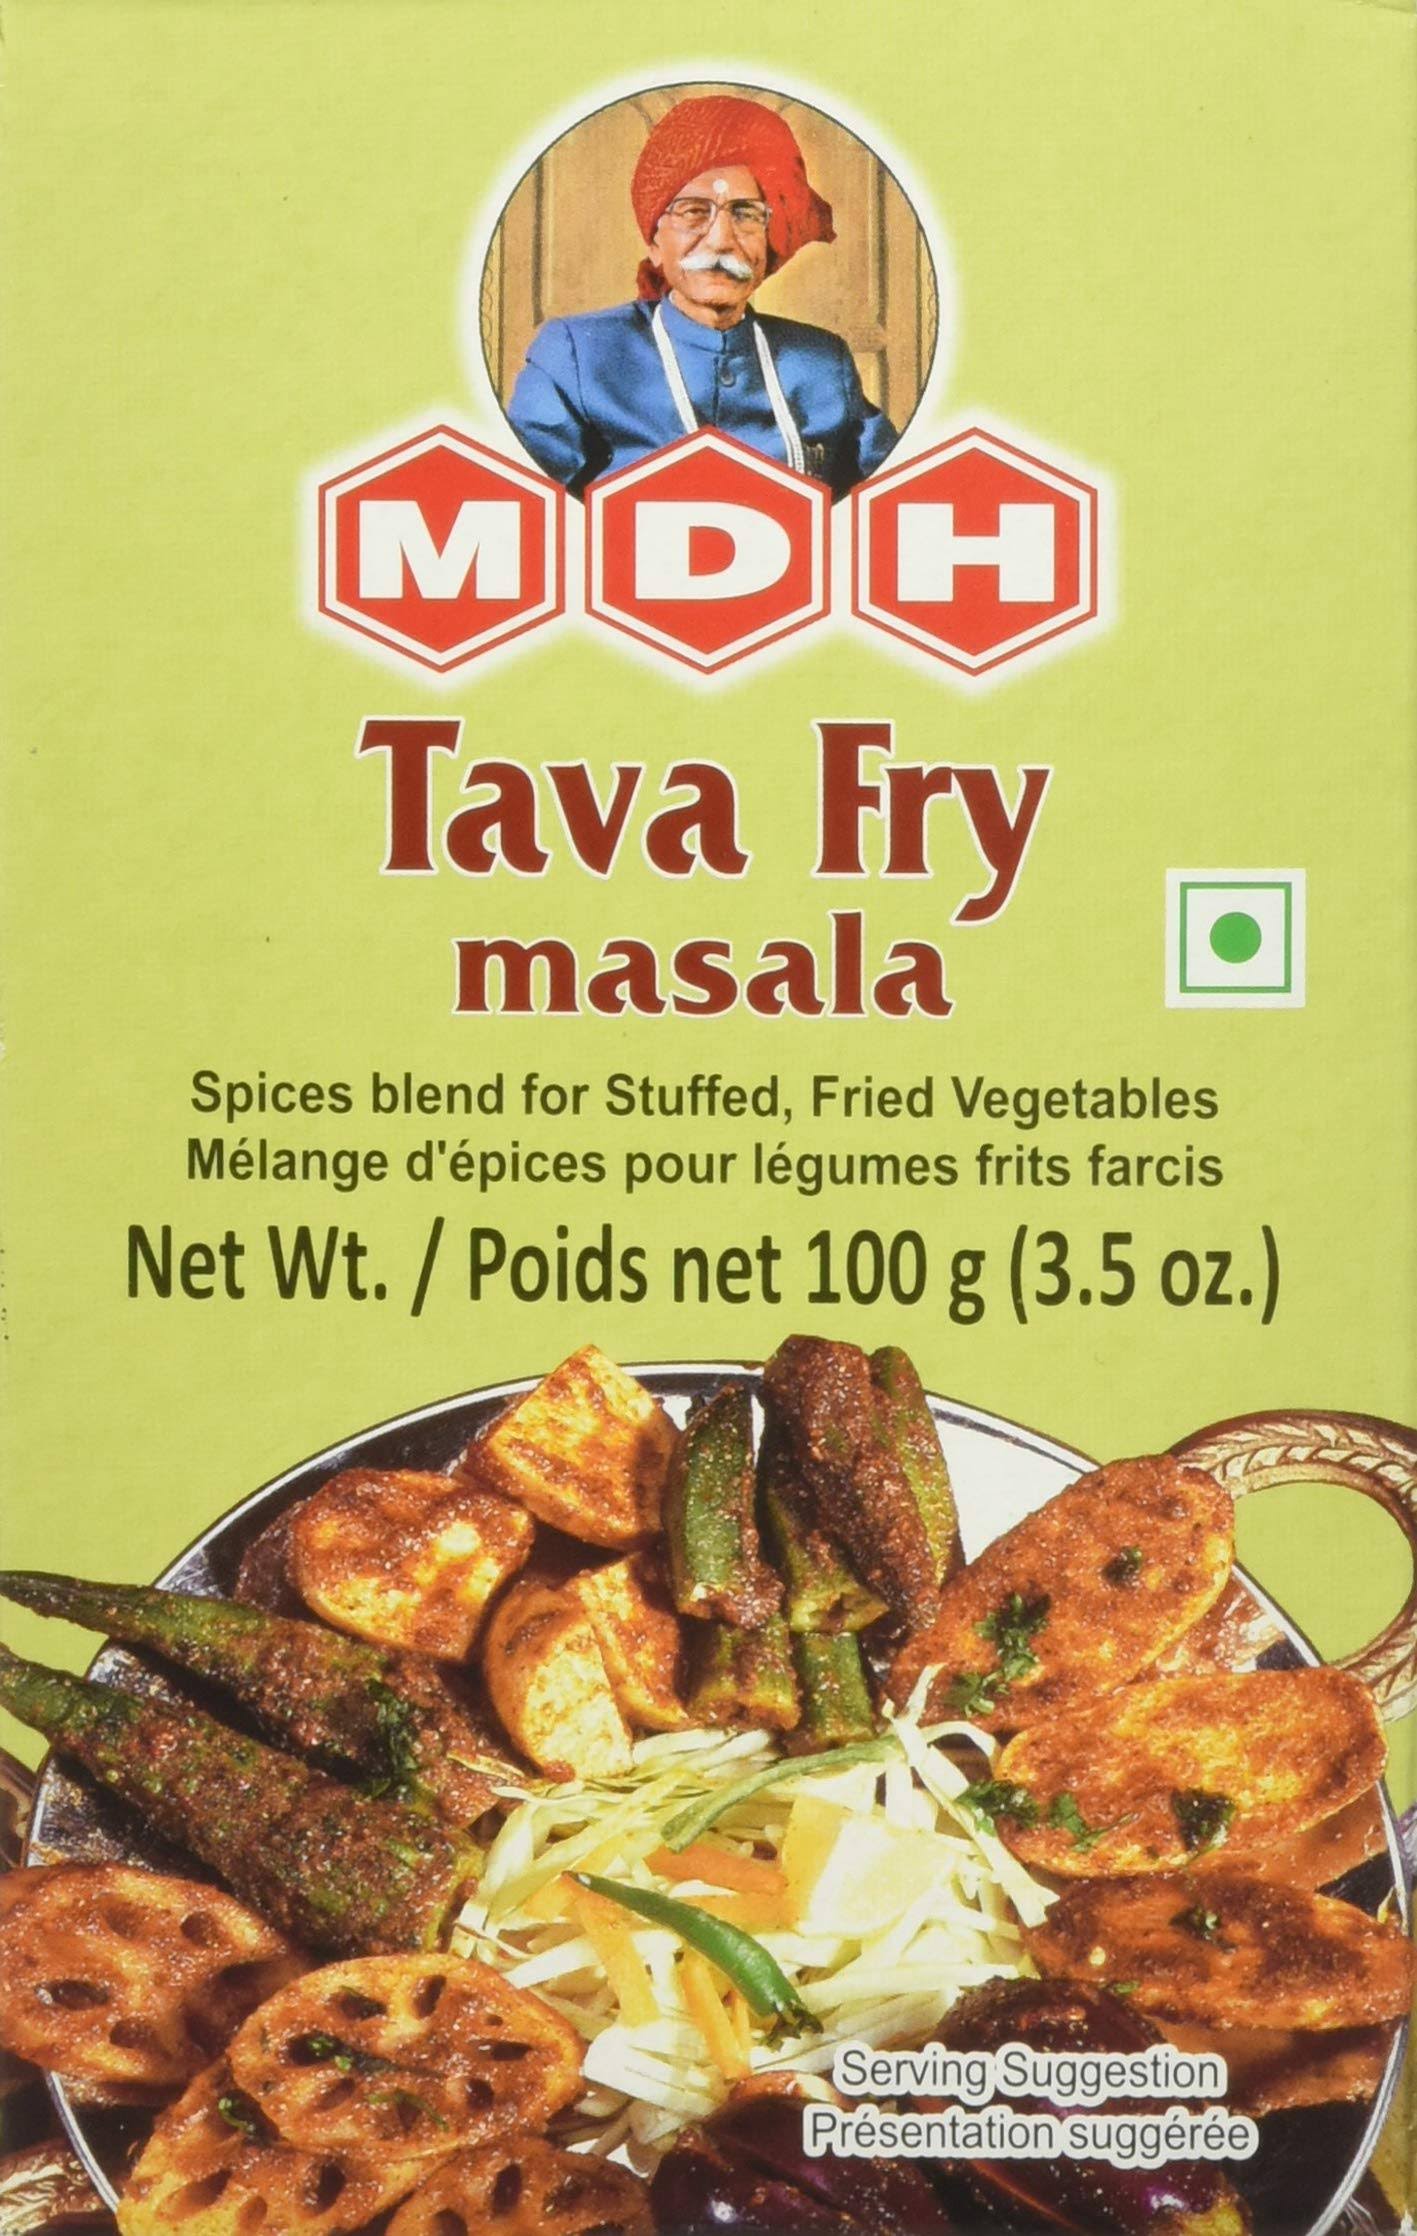 MDH Tava Fry Masala Mixed Spices and Seasonings - 3.5oz